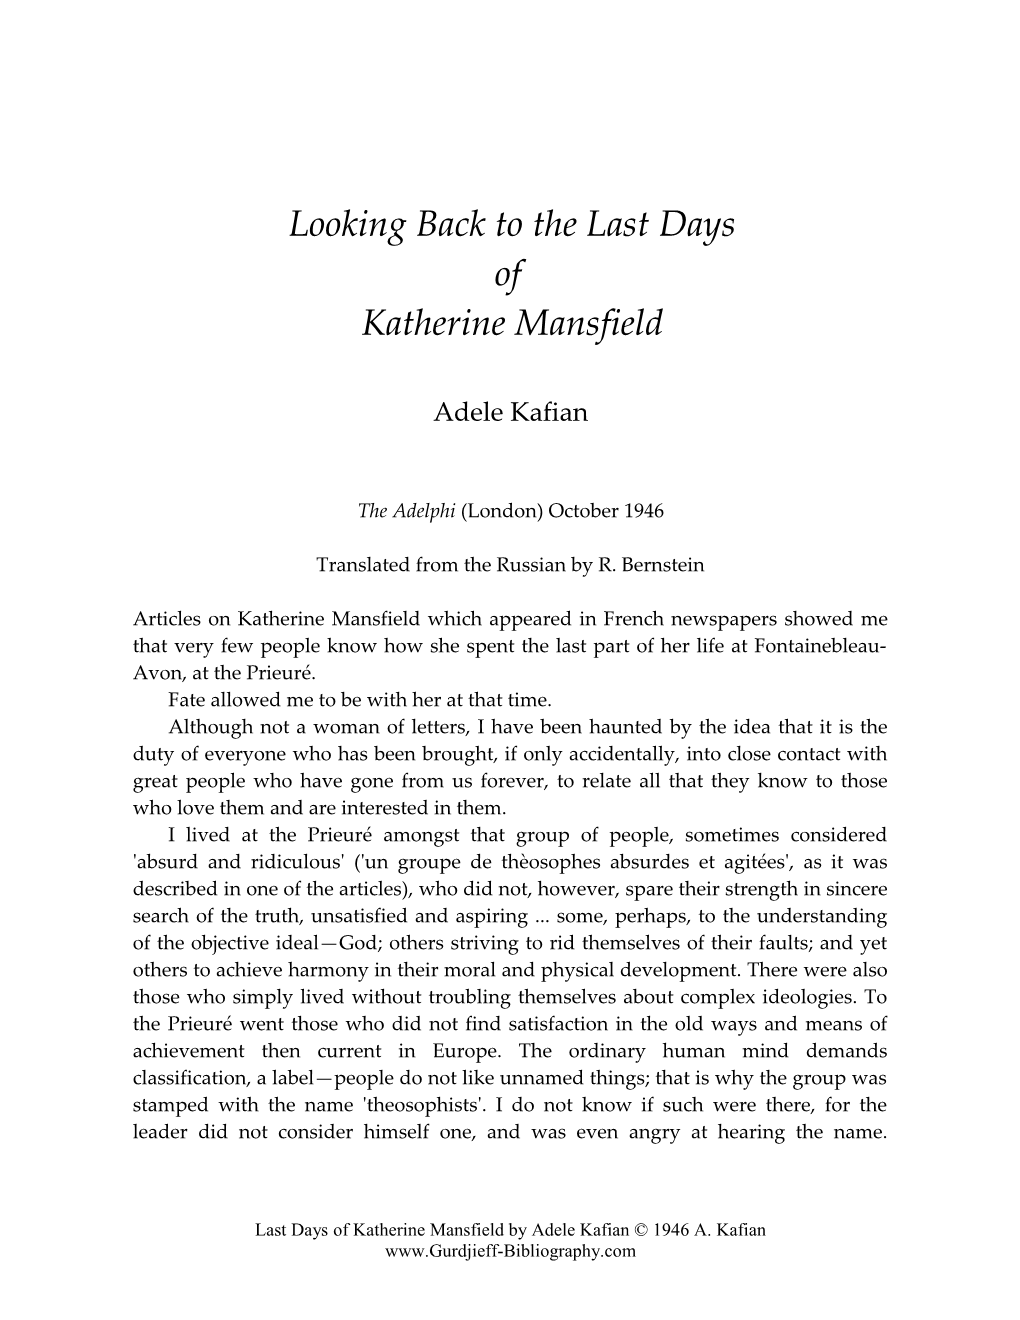 Adele Kafian's Account of the Last Days of Katherine Mansfield